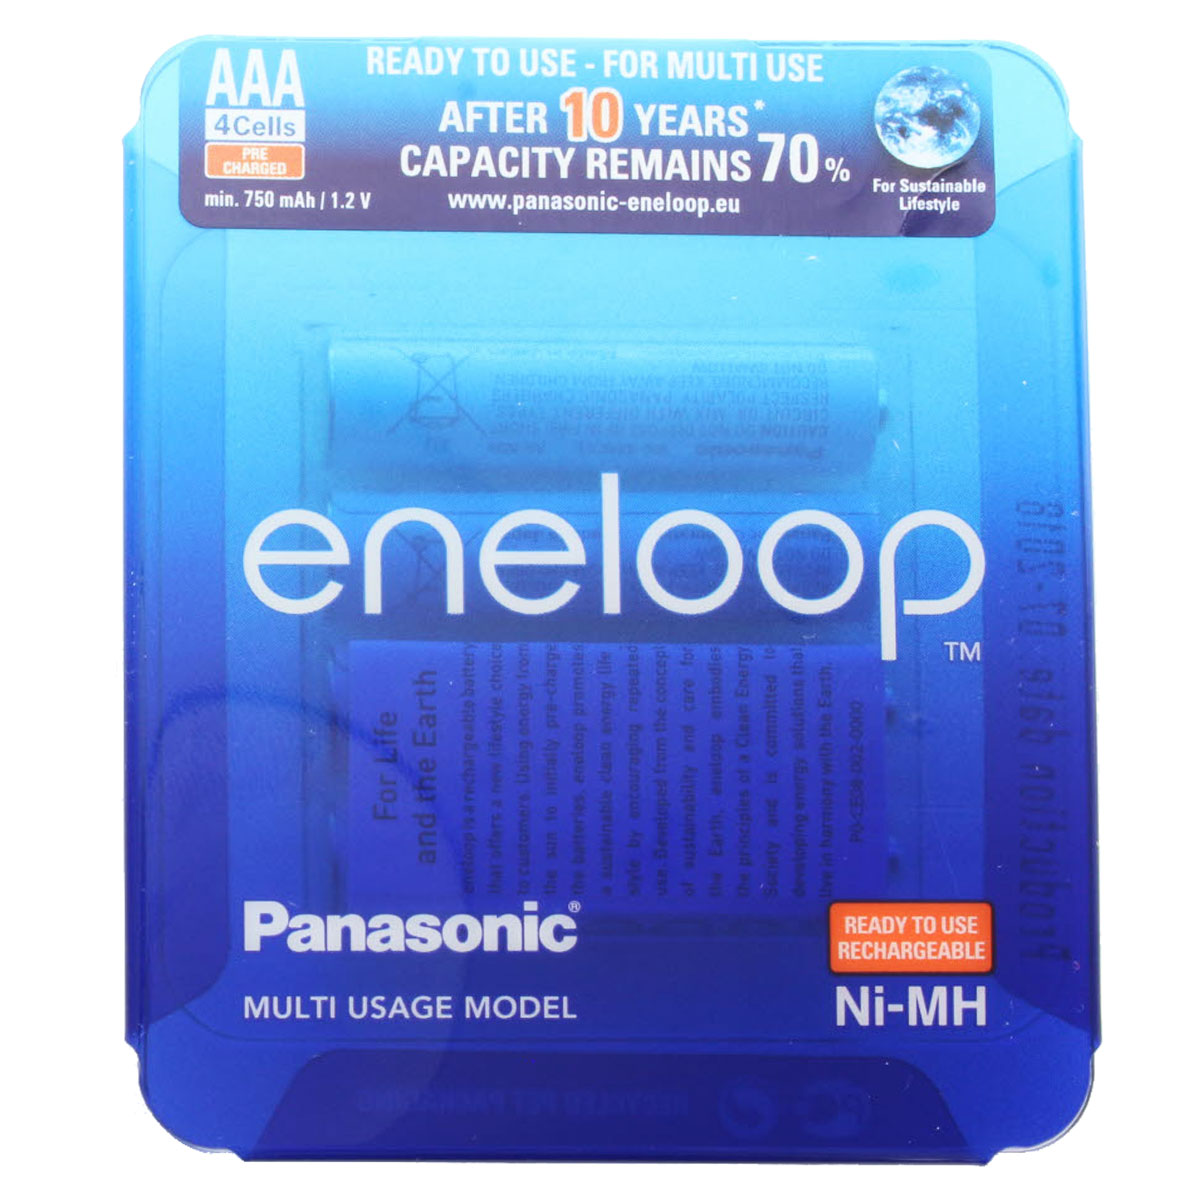 Panasonic eneloop Standard HR-3UTGA-4BP-CASE 8x Mignon AA Akkus und 1 AccuCell LCD-Ladegerät